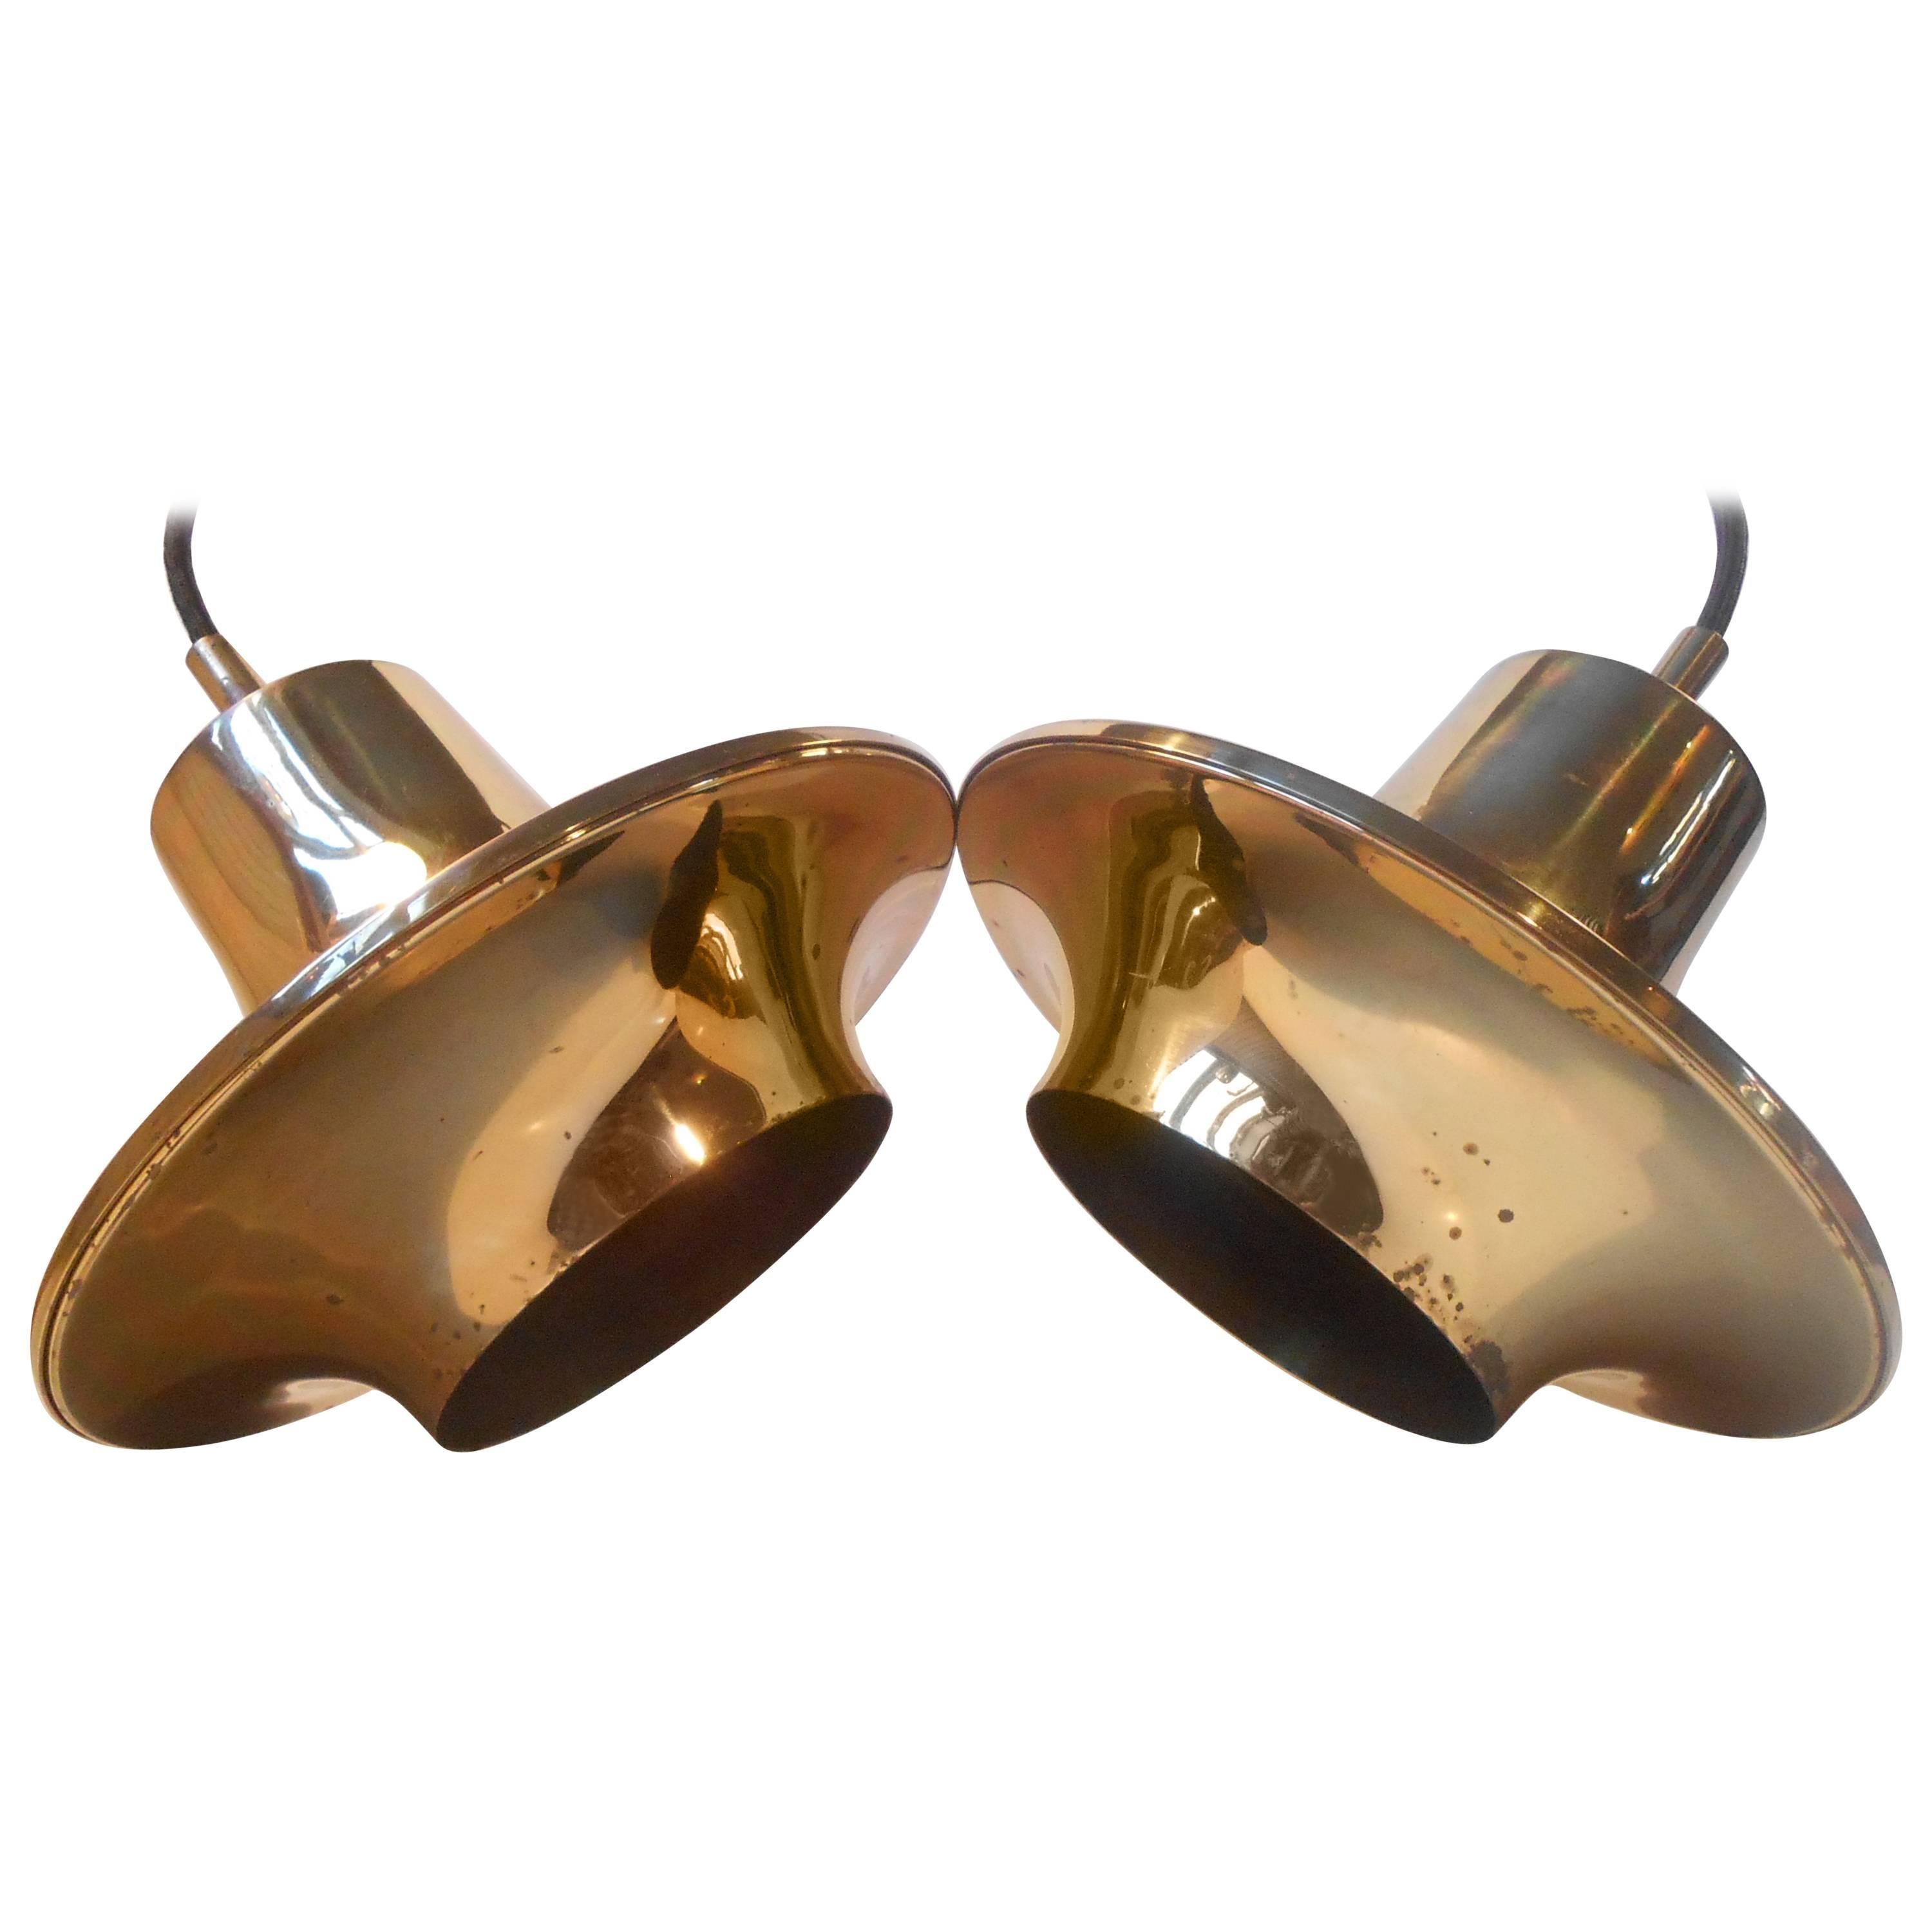 Hans-Agne Jakobsson Pair of Solid Brass Saucer Pendant Lamps, 60s Swedish Modern